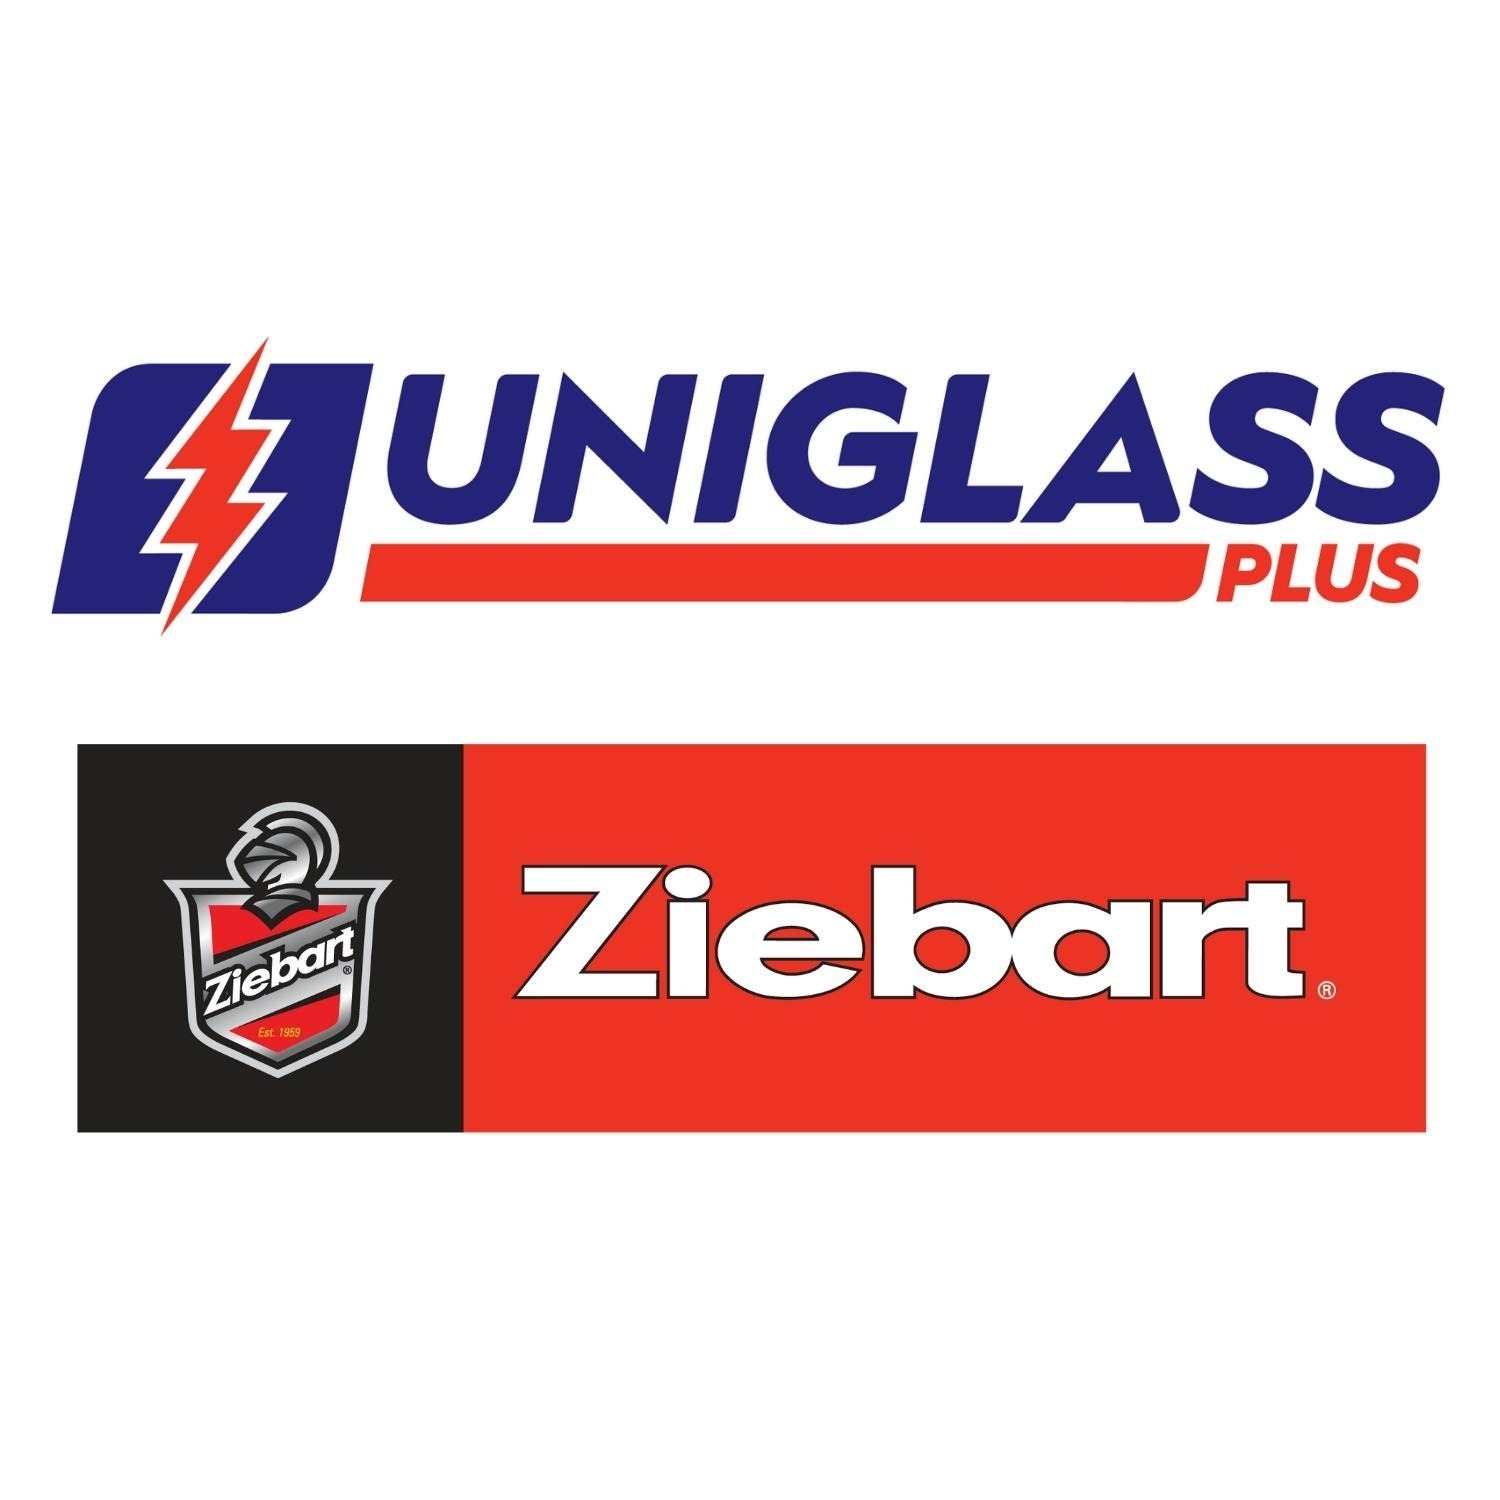 View UniglassPlus / Ziebart’s Bedford profile